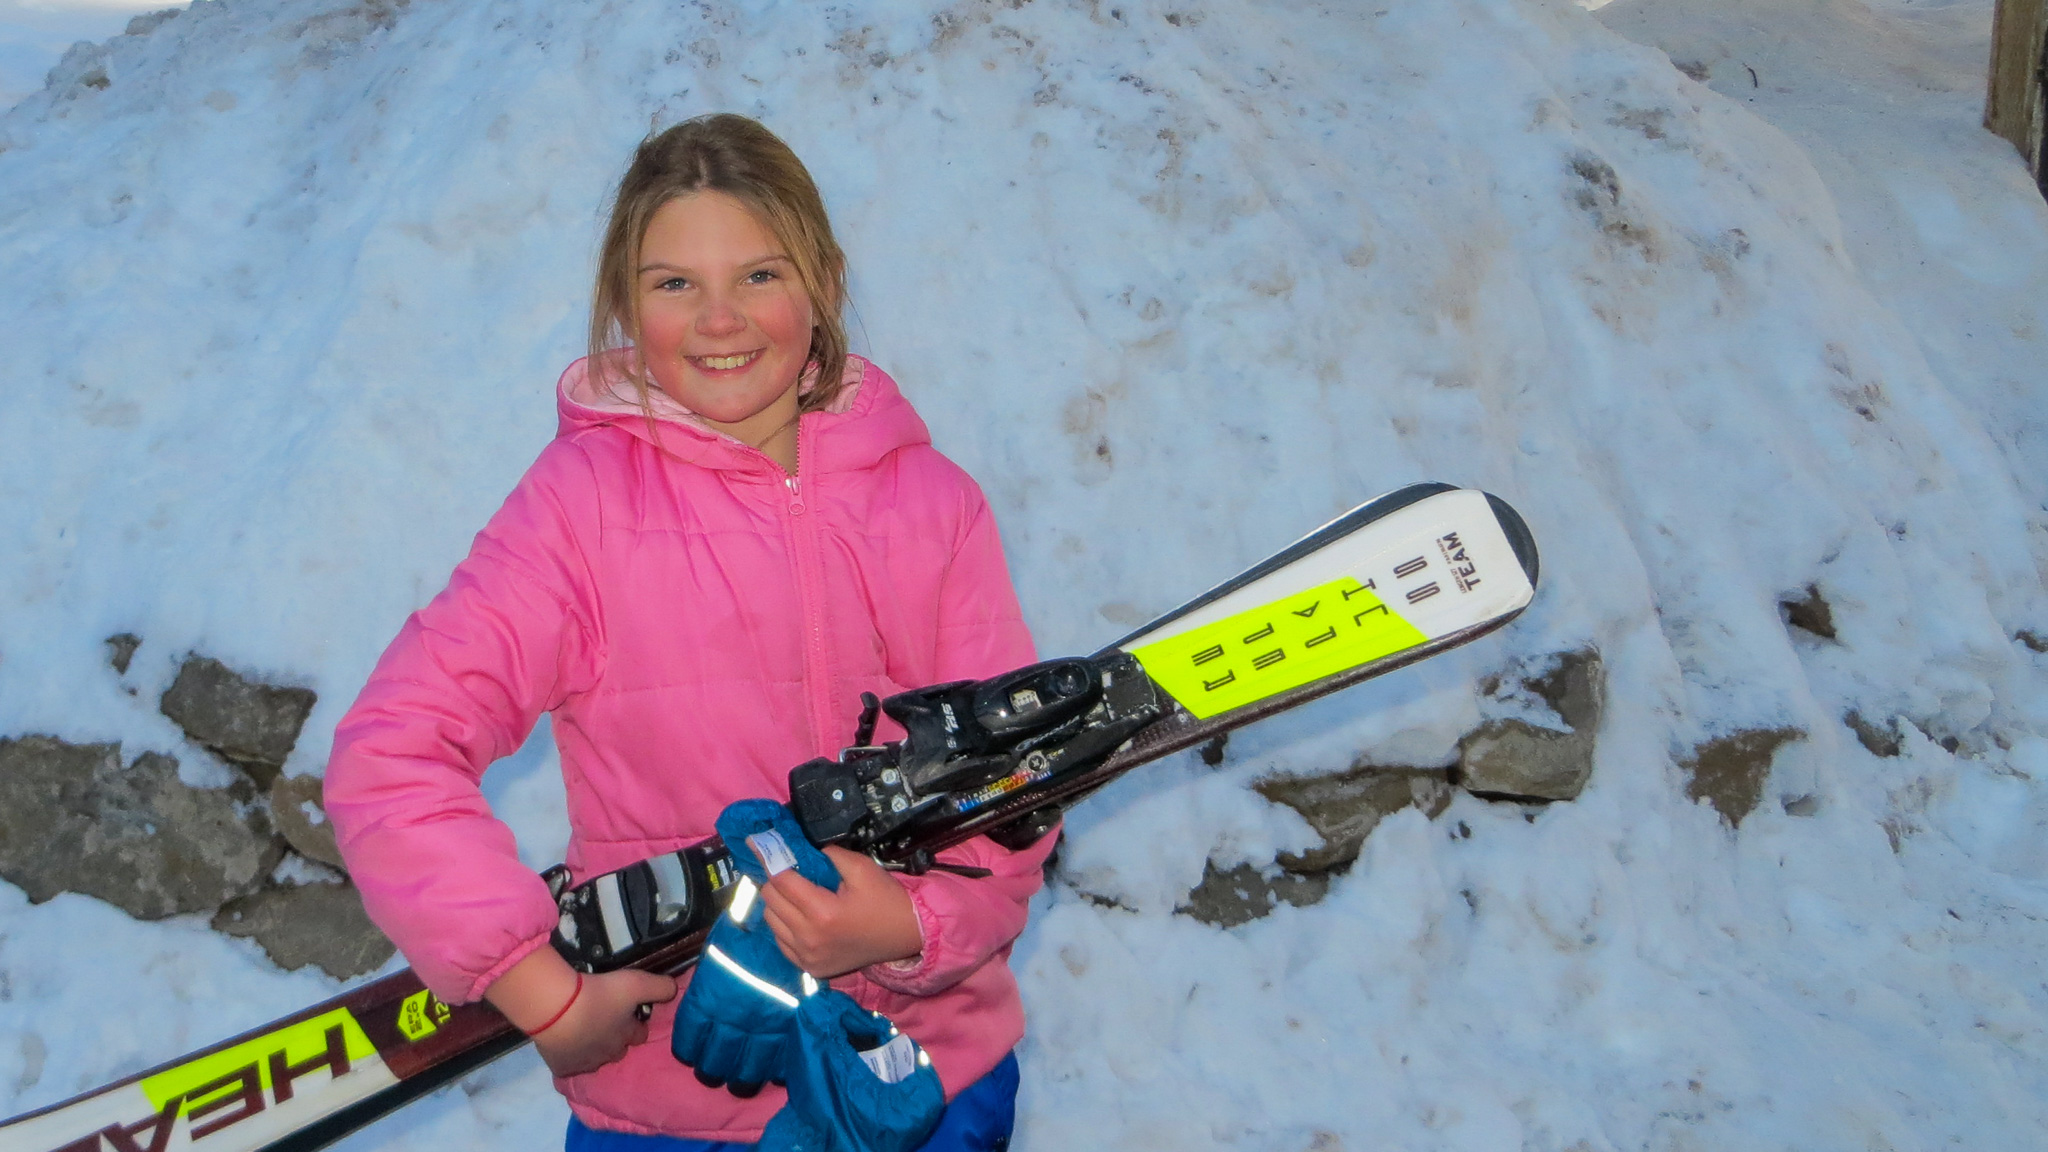 Student carrying ski/snowboarding equipment.